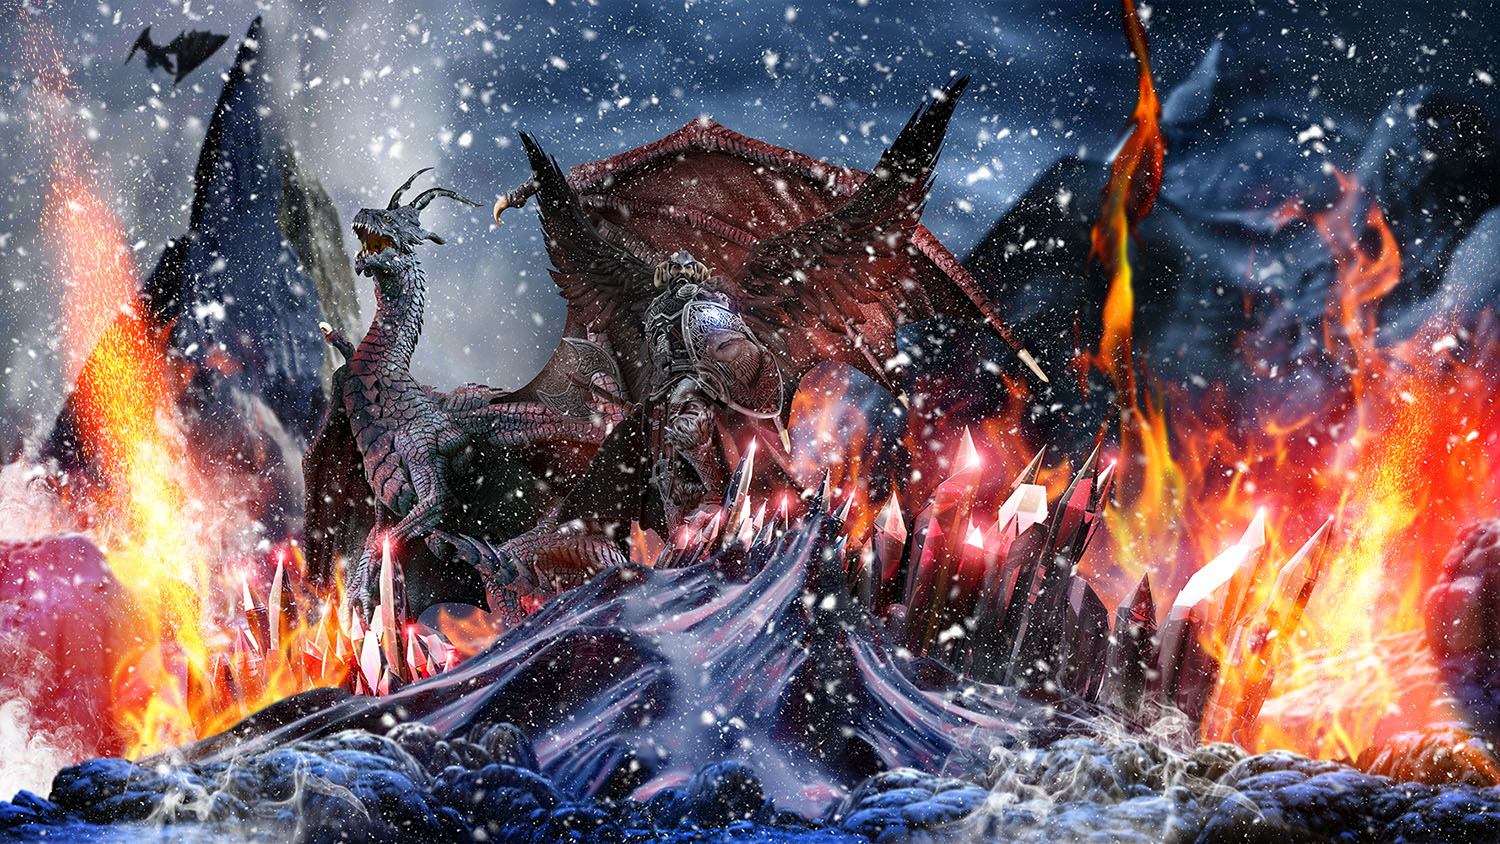 46x26_CANVAS - Viking and Dragon scene